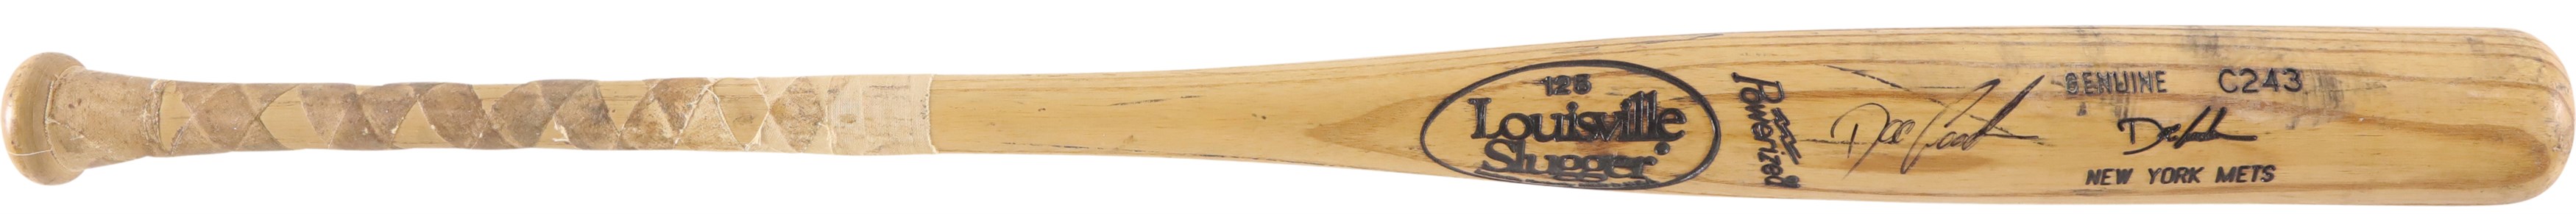 - 1993 Dwight Gooden New York Mets Game Used Bat (PSA GU 10)